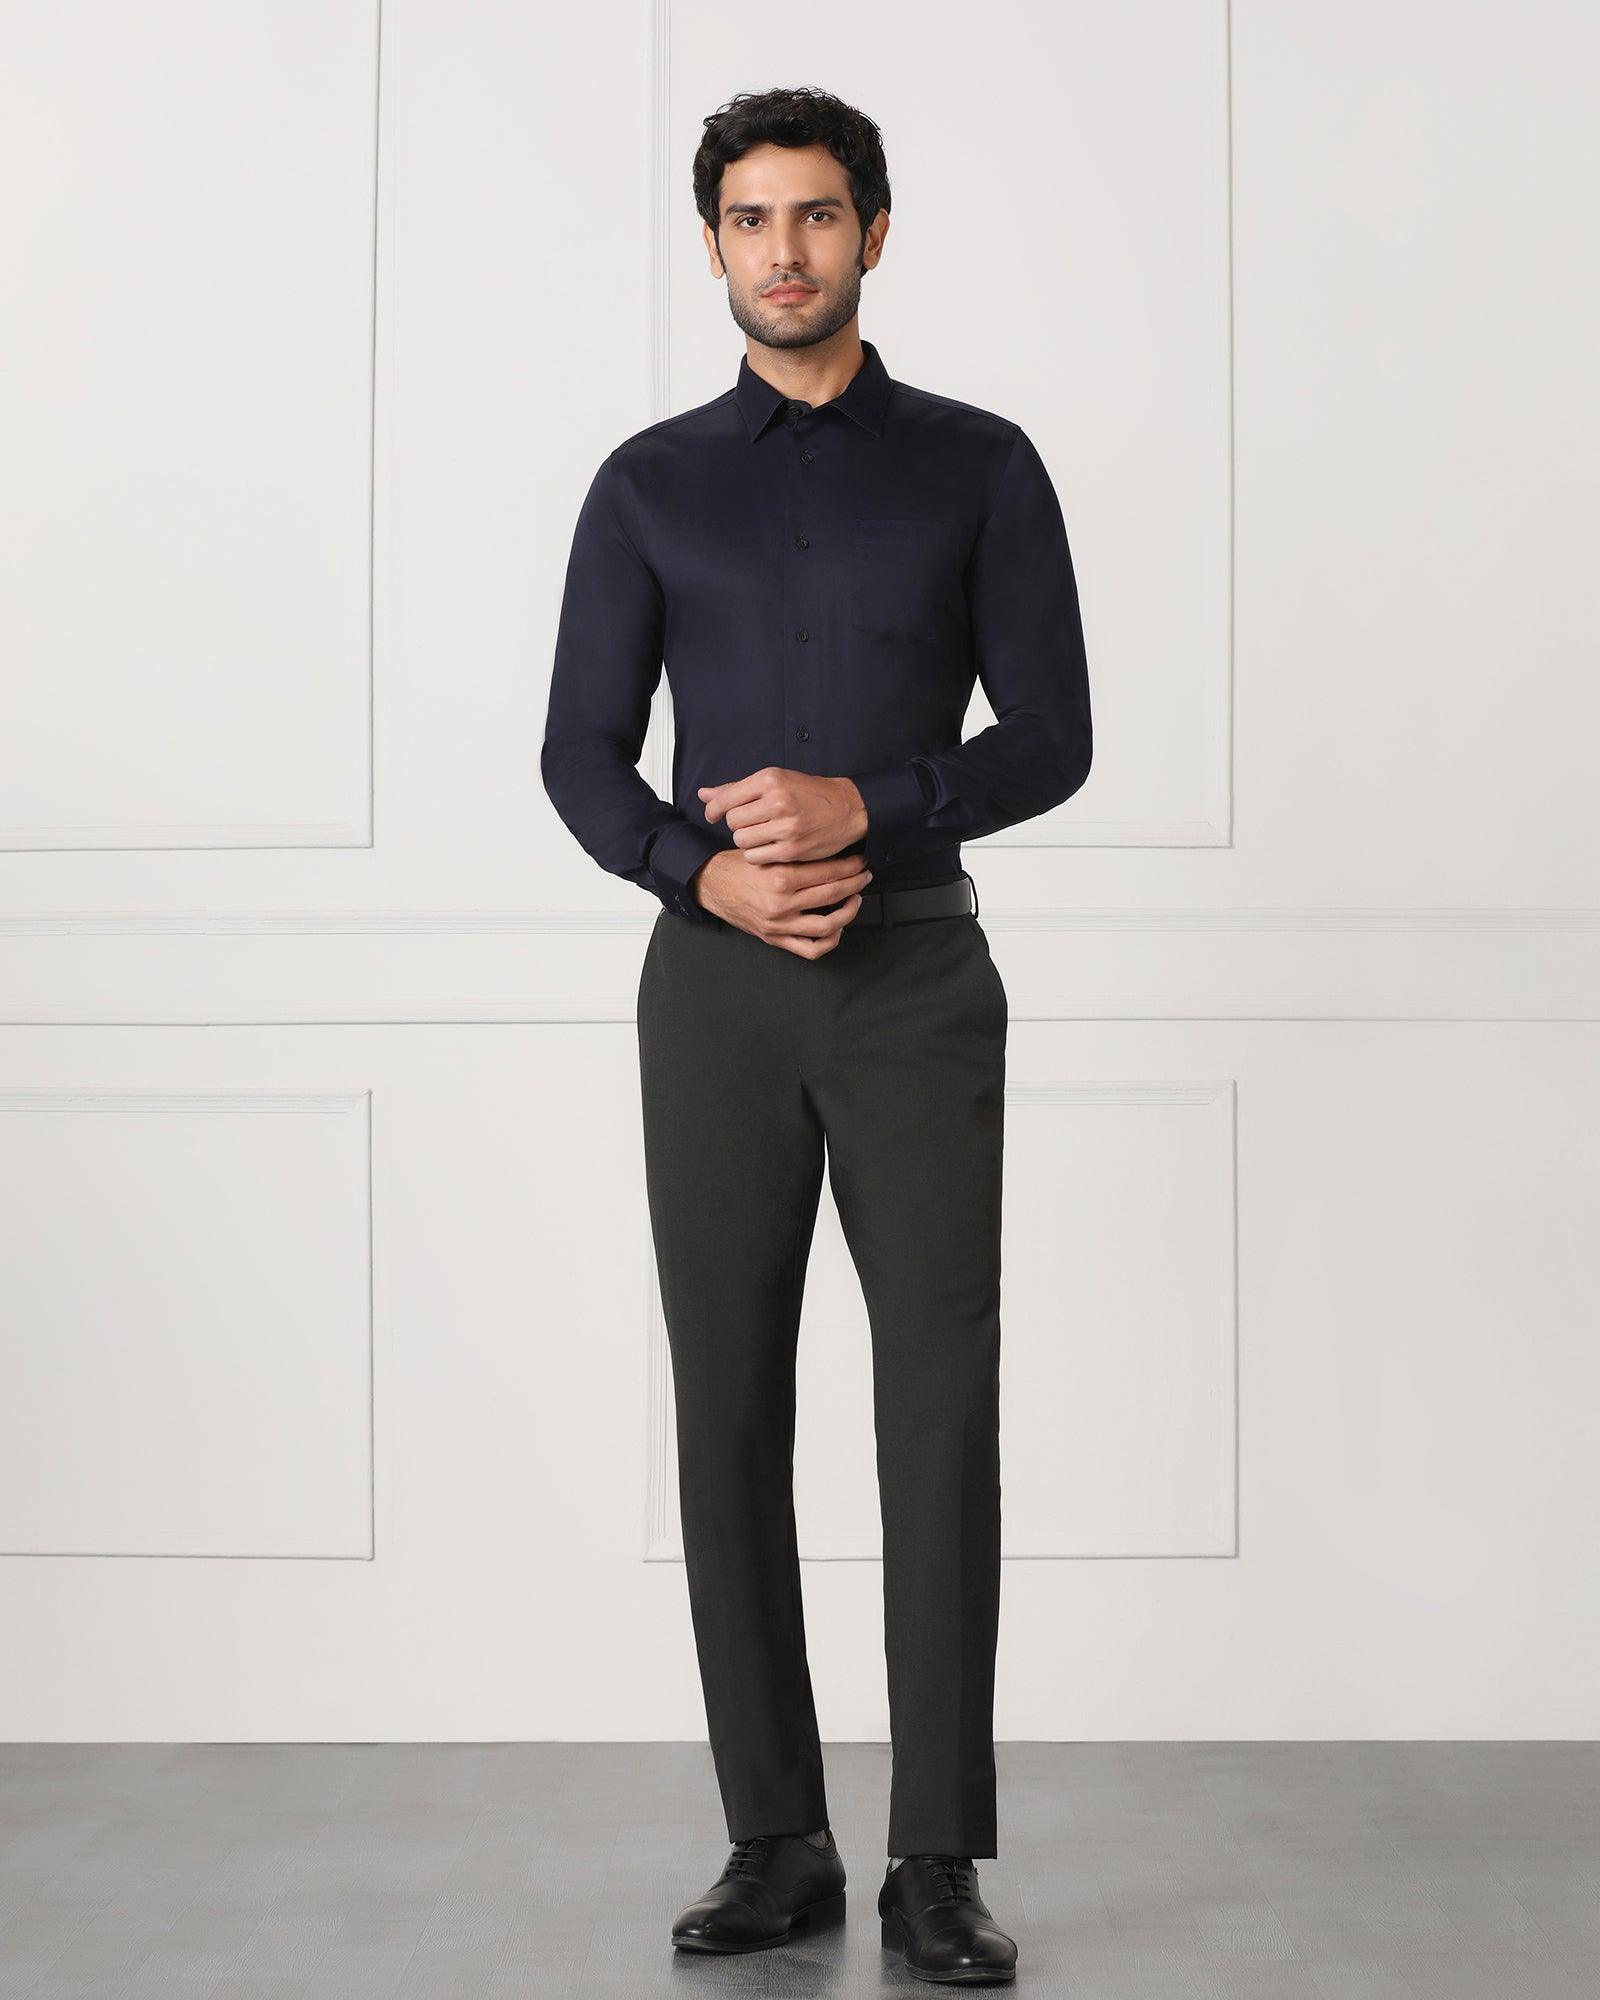 Buy Mens Casual B95 Slim Fit Stretchable Khakis at Amazonin